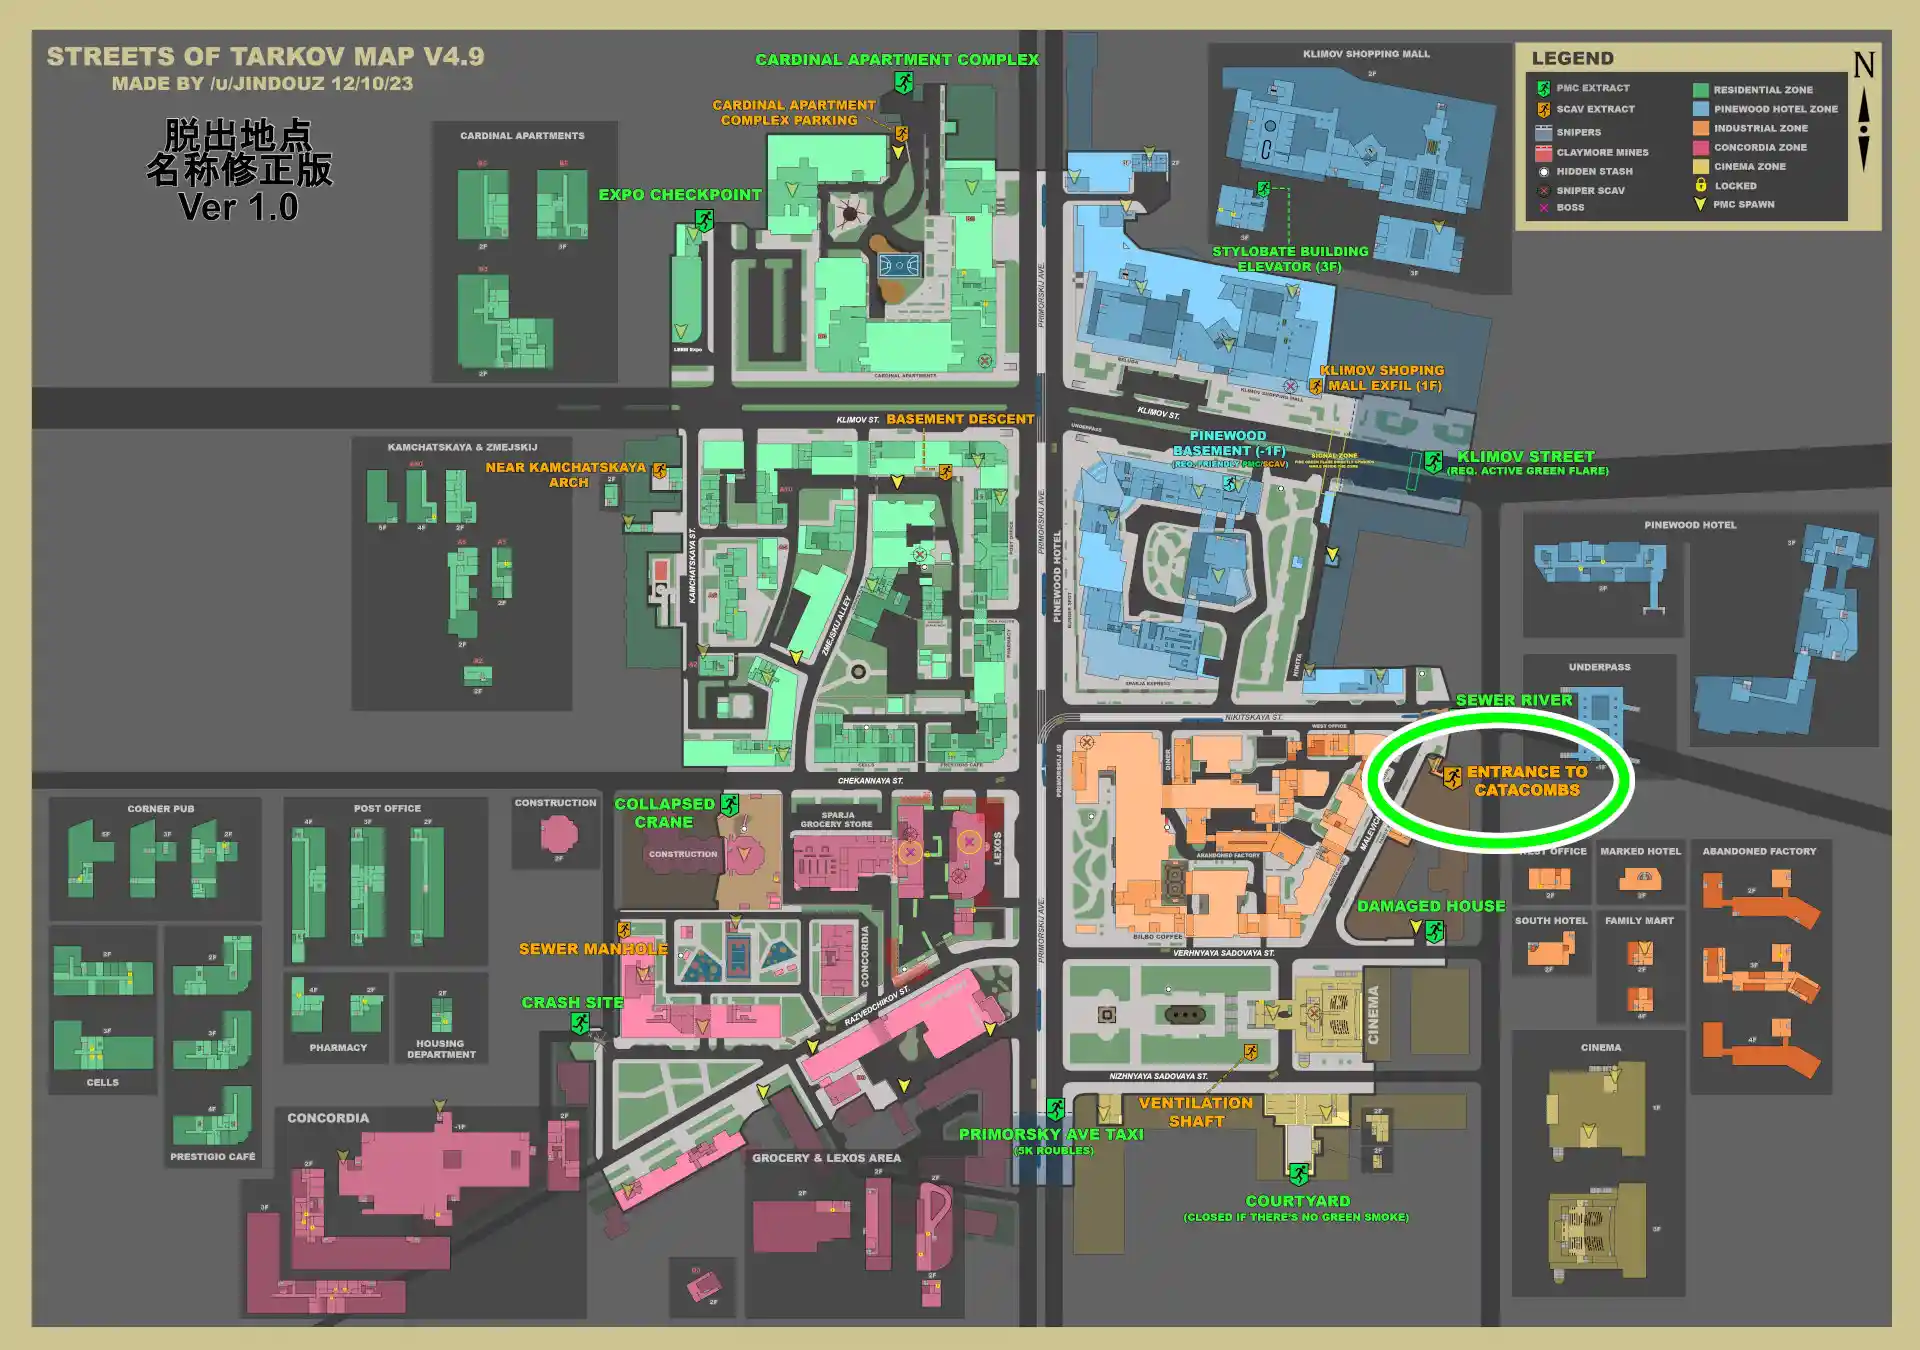 STREETS_OF_TARKOV-ESC-Entrance_to_Catacombs-MAP.jpg